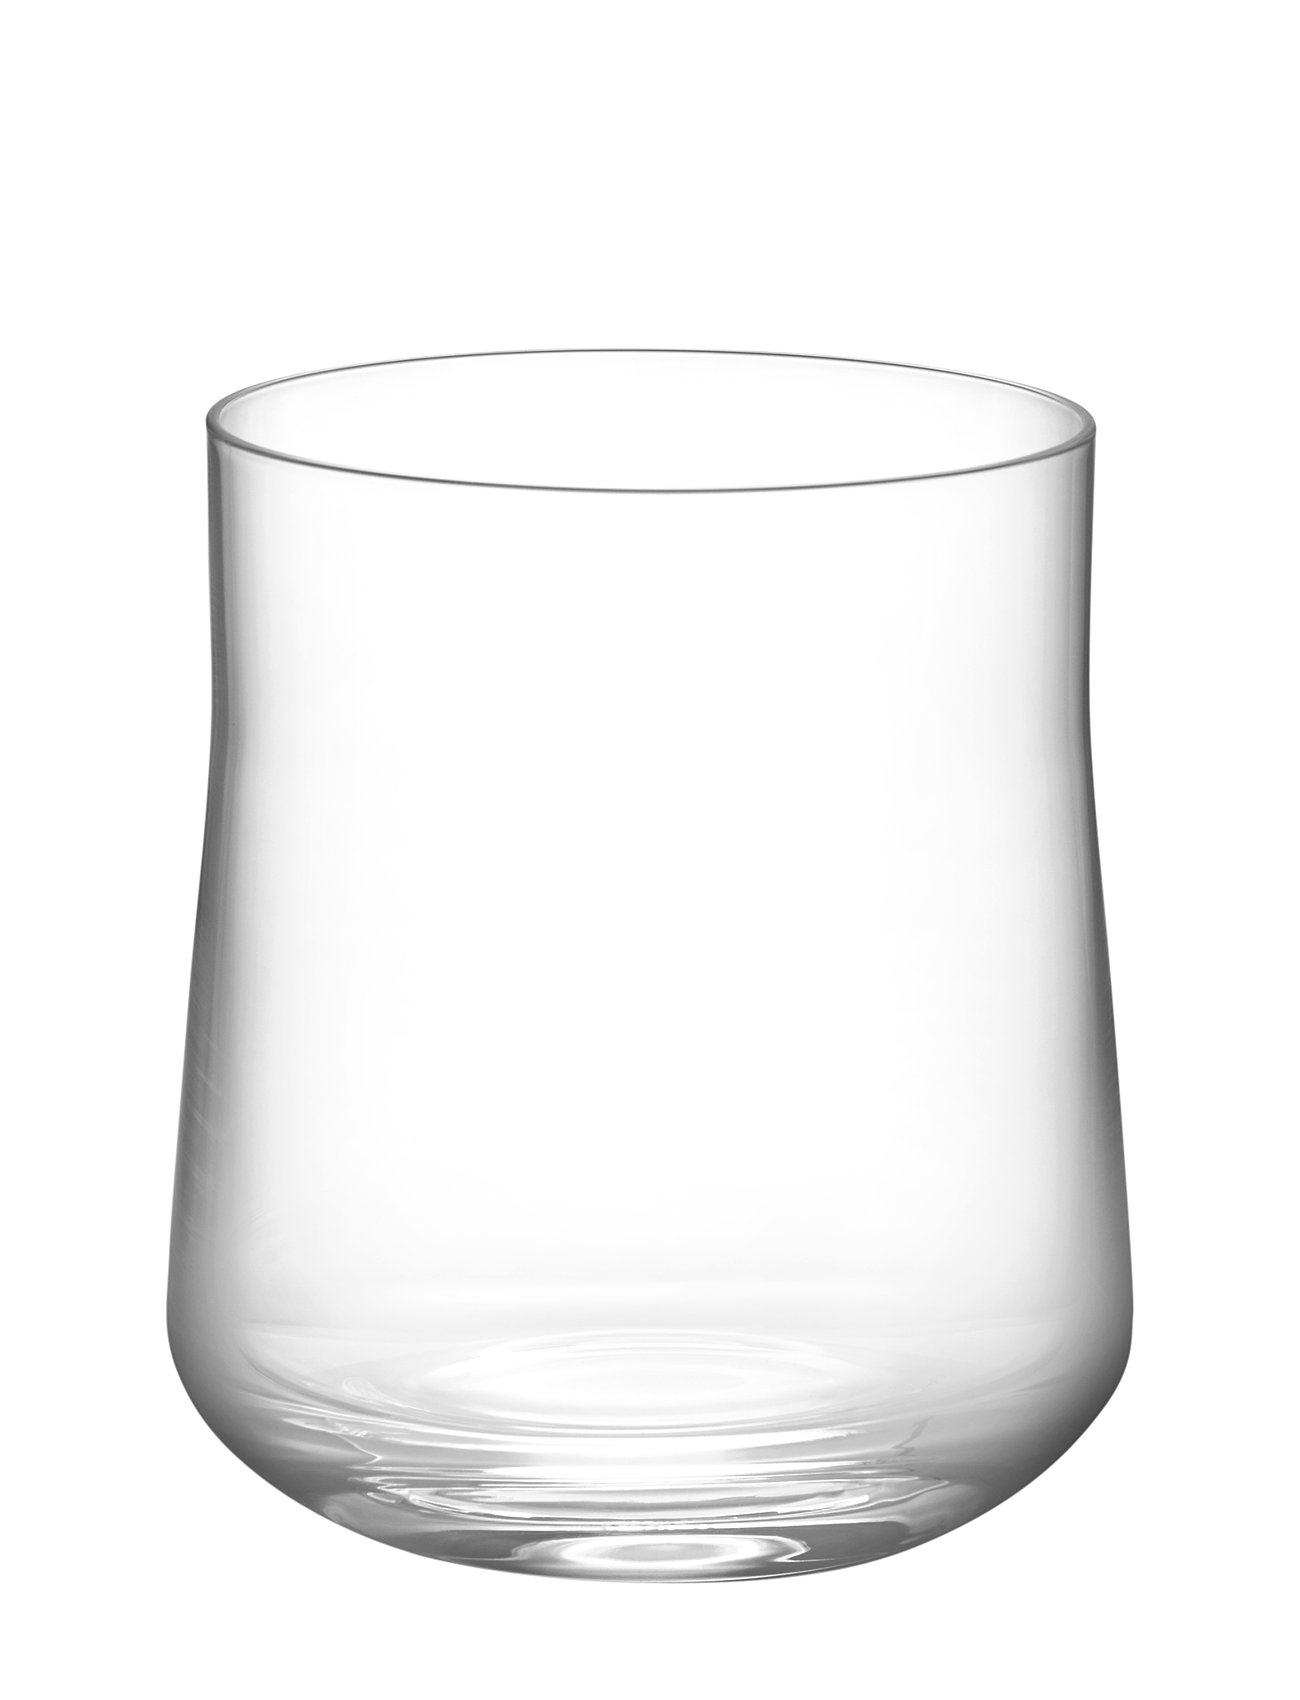 Informal Tumblerglas Home Tableware Glass Drinking Glass Nude Orrefors